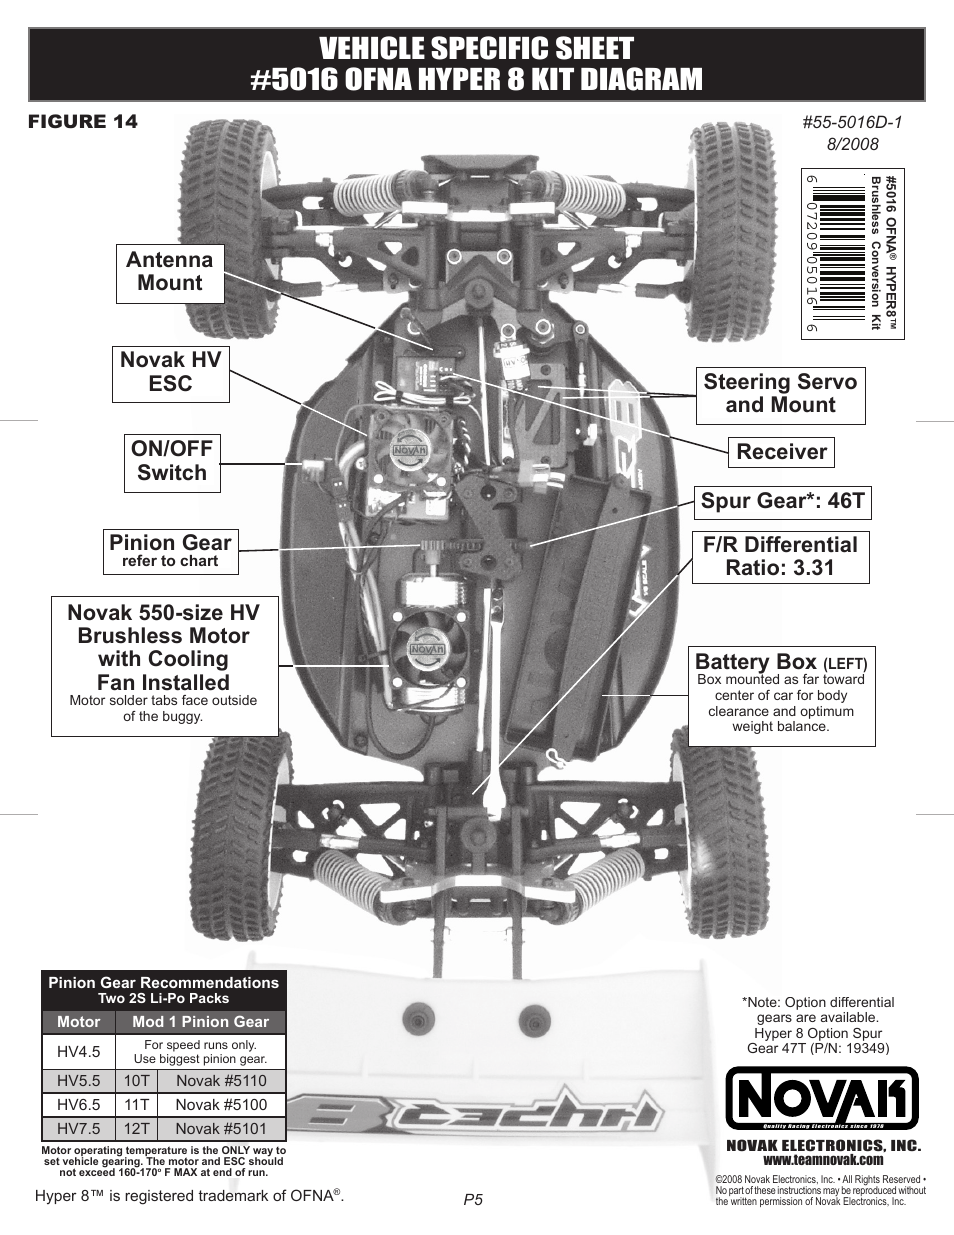 Novak Crawler Brushless System (55-5016D-1) User Manual | 1 page